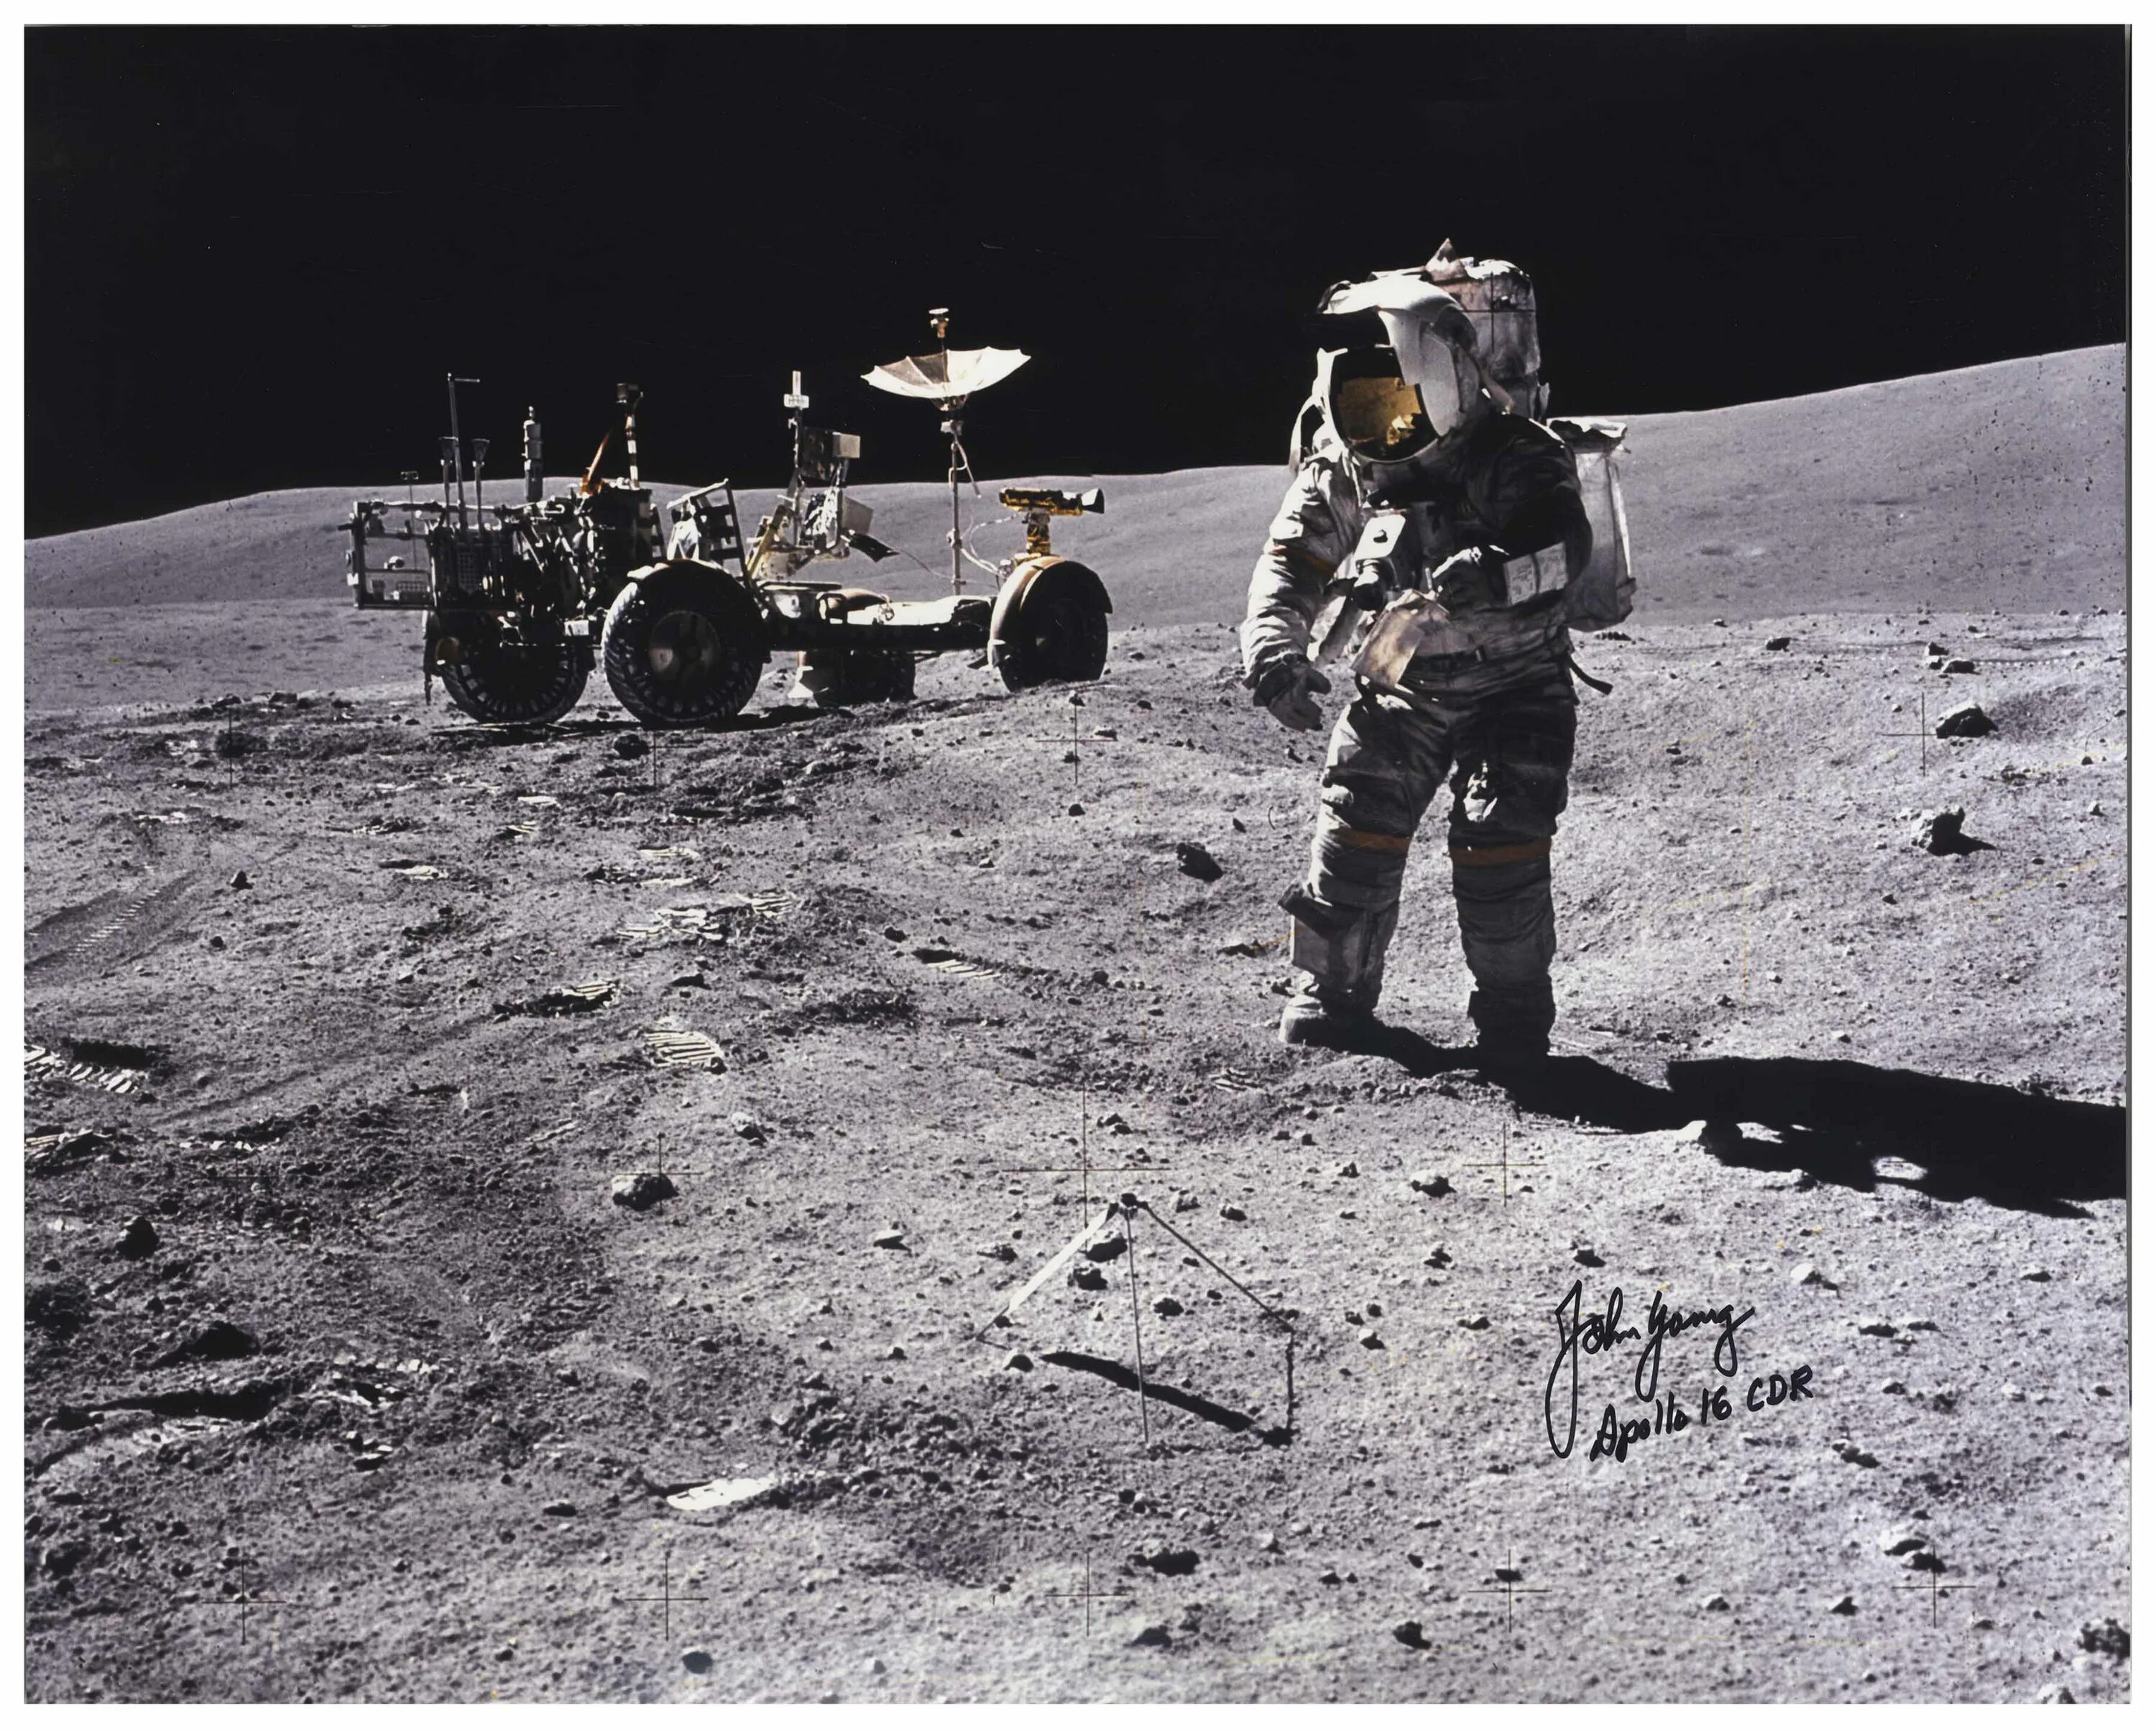 Высадка аполлона. Аполлон 11 высадка. Аполло-14 астронавты на Луне. Миссия Аполлон 11. Американцы на Луне 1969.